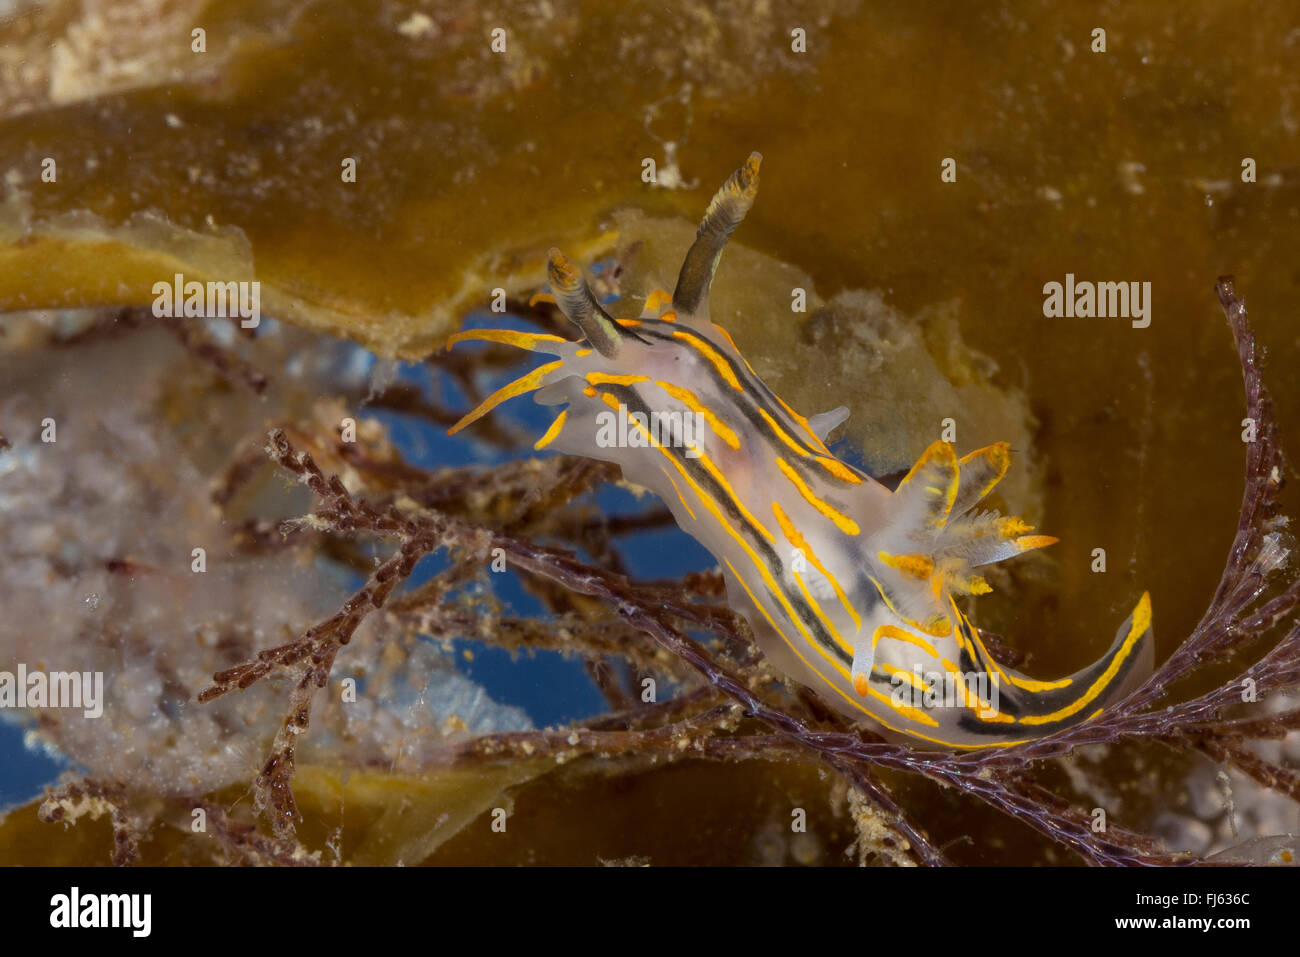 vier-gestreiften Polycera (Polycera Quadrilineata, Polycera Lineatus, Thecacera Capitata, Doris Quadrilineata), auf einer Koralle Stockfoto